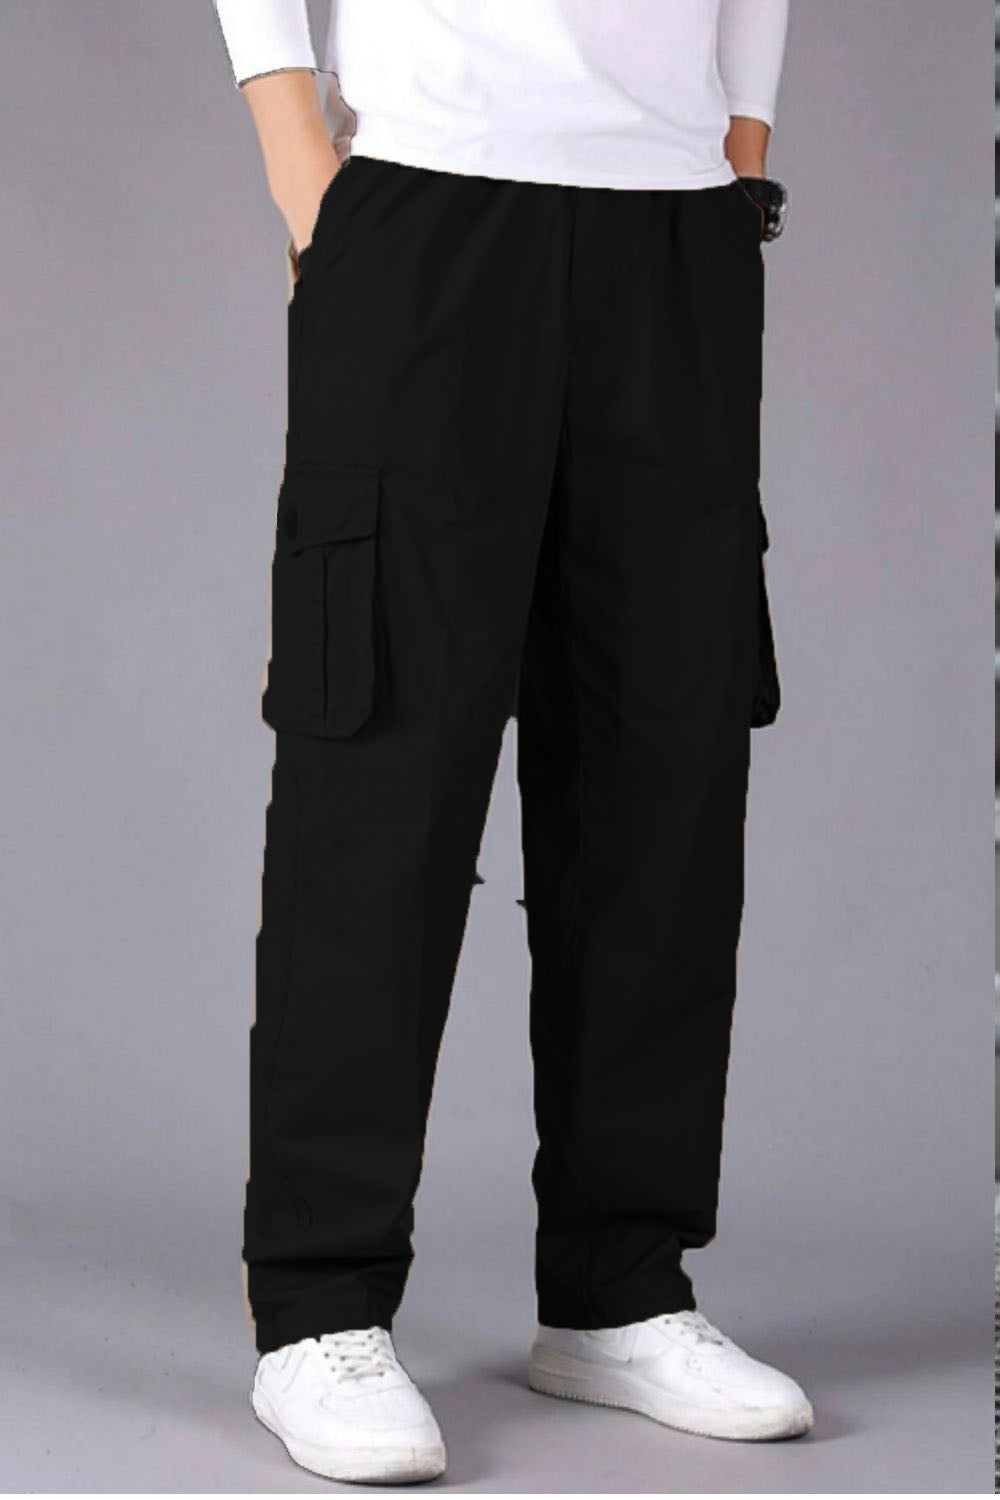 EIGHTYFIVE 4 POCKET PANTS  Cargo trousers  black  Zalandocouk